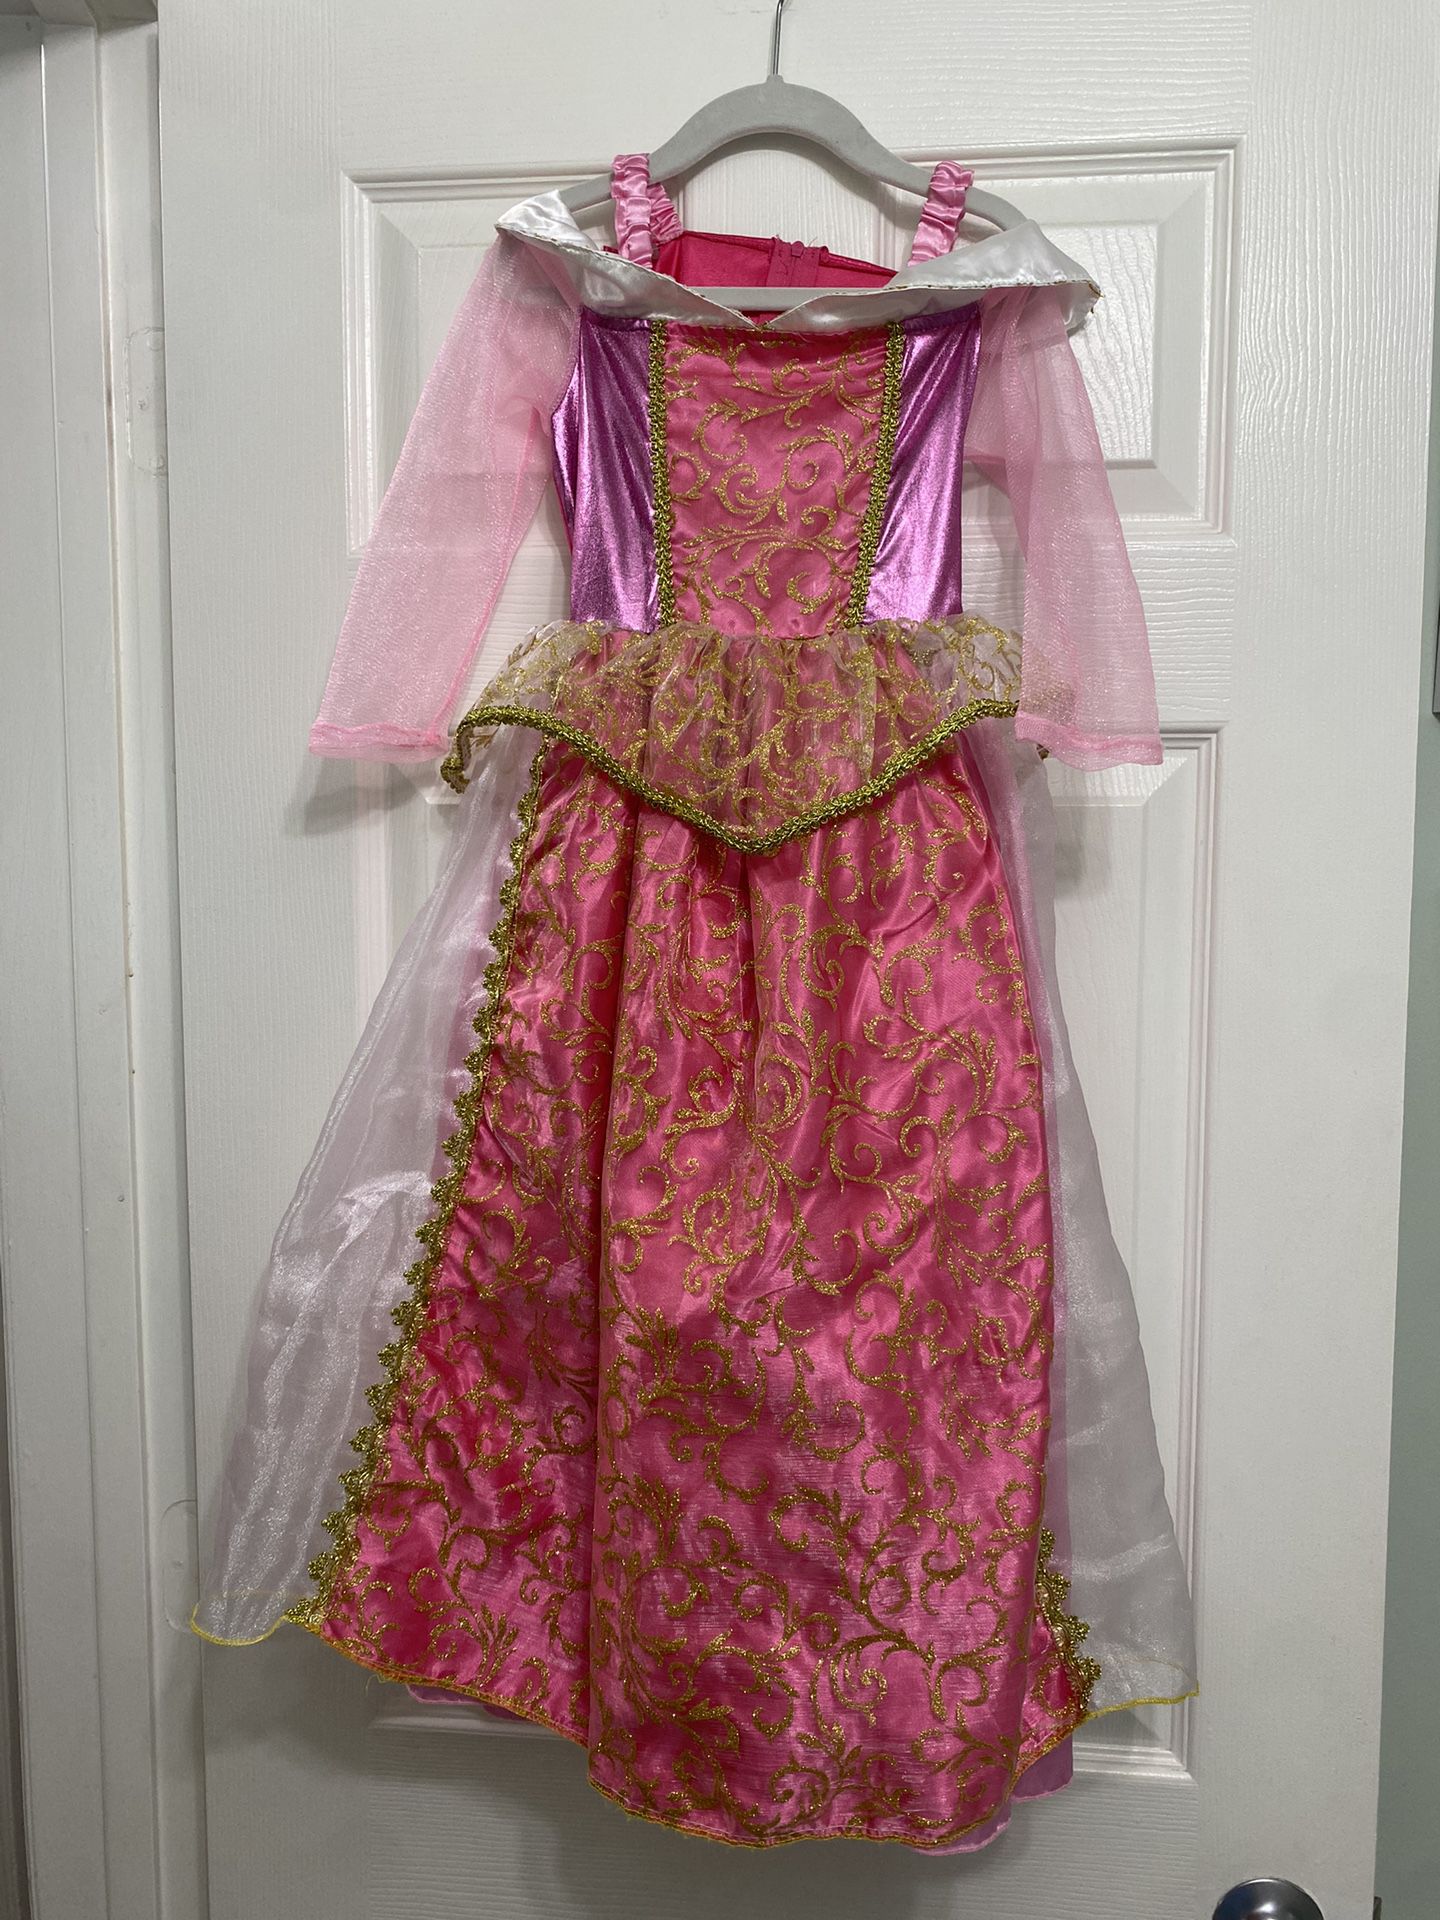 Princess Costume Dresses (5 Total): Child Size 4